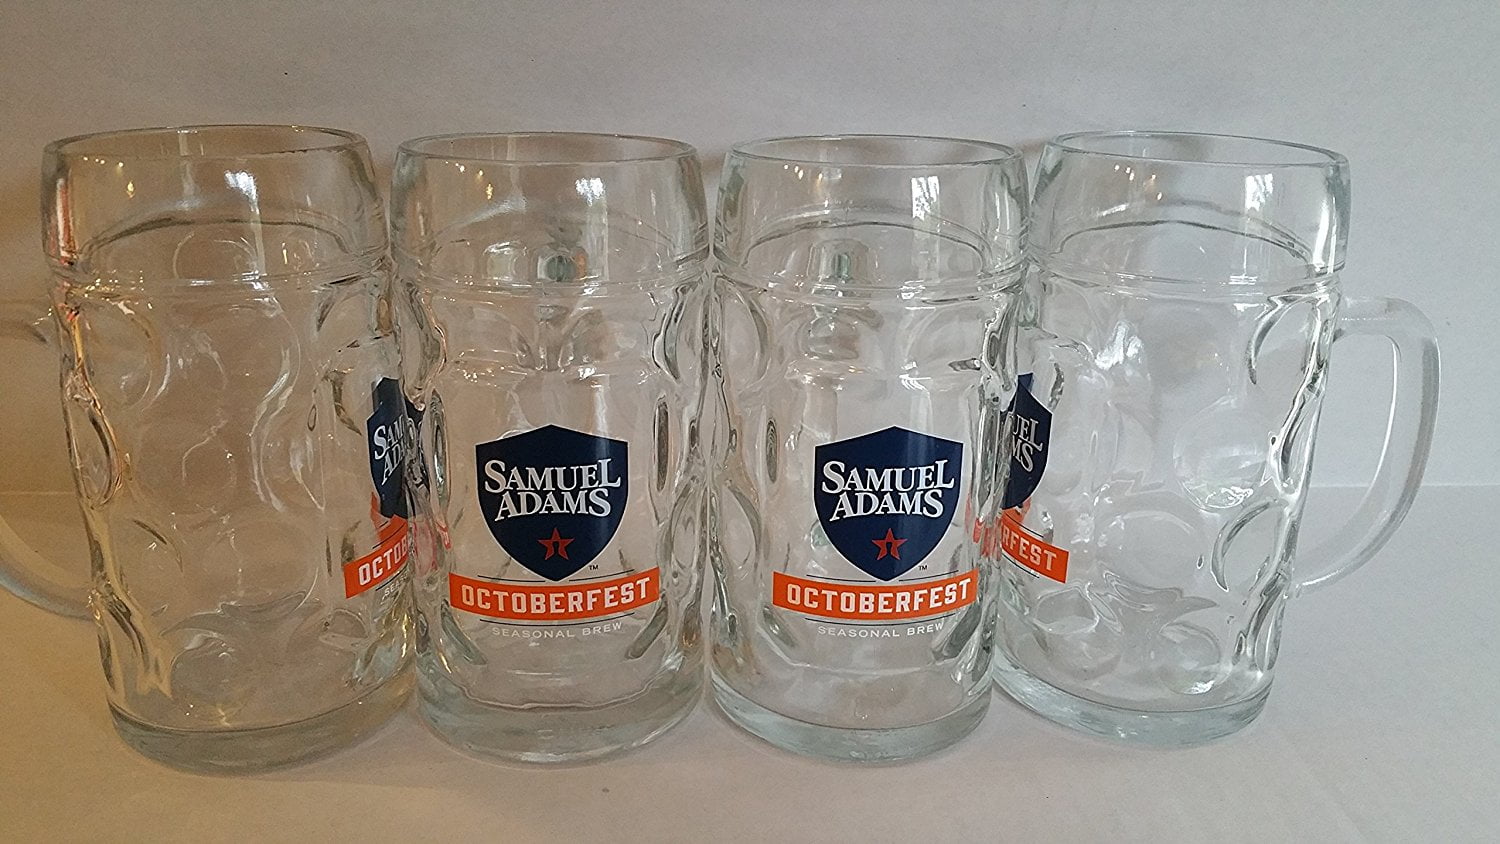 Samuel Sam Adams Octoberfest Beer Mug Dimpled Glass Stein Oktoberfest Brewery 